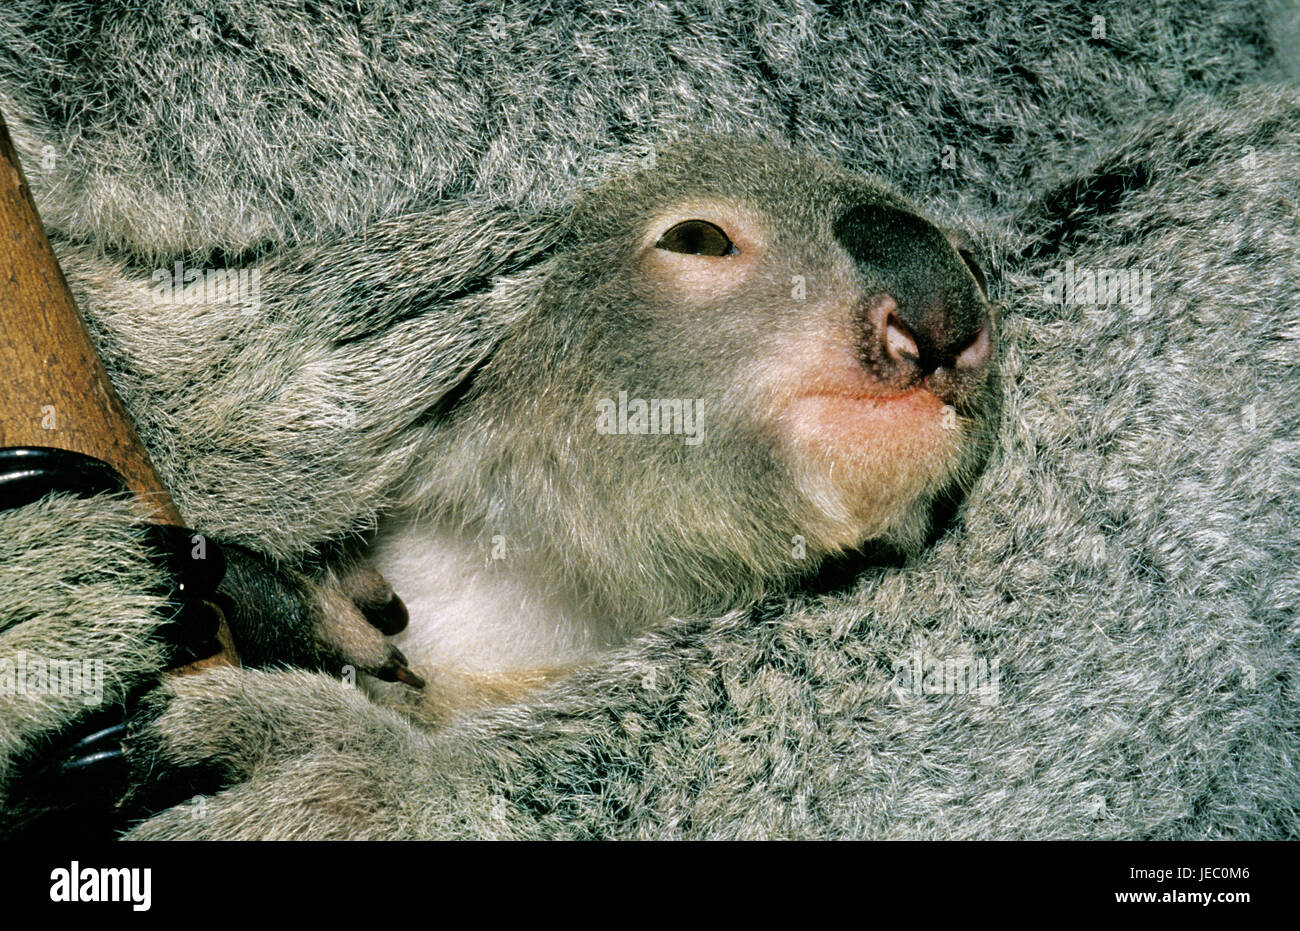 Koala, Phascolarctos cinereus, young animal, head, fur, medium close-up, Australia, Stock Photo